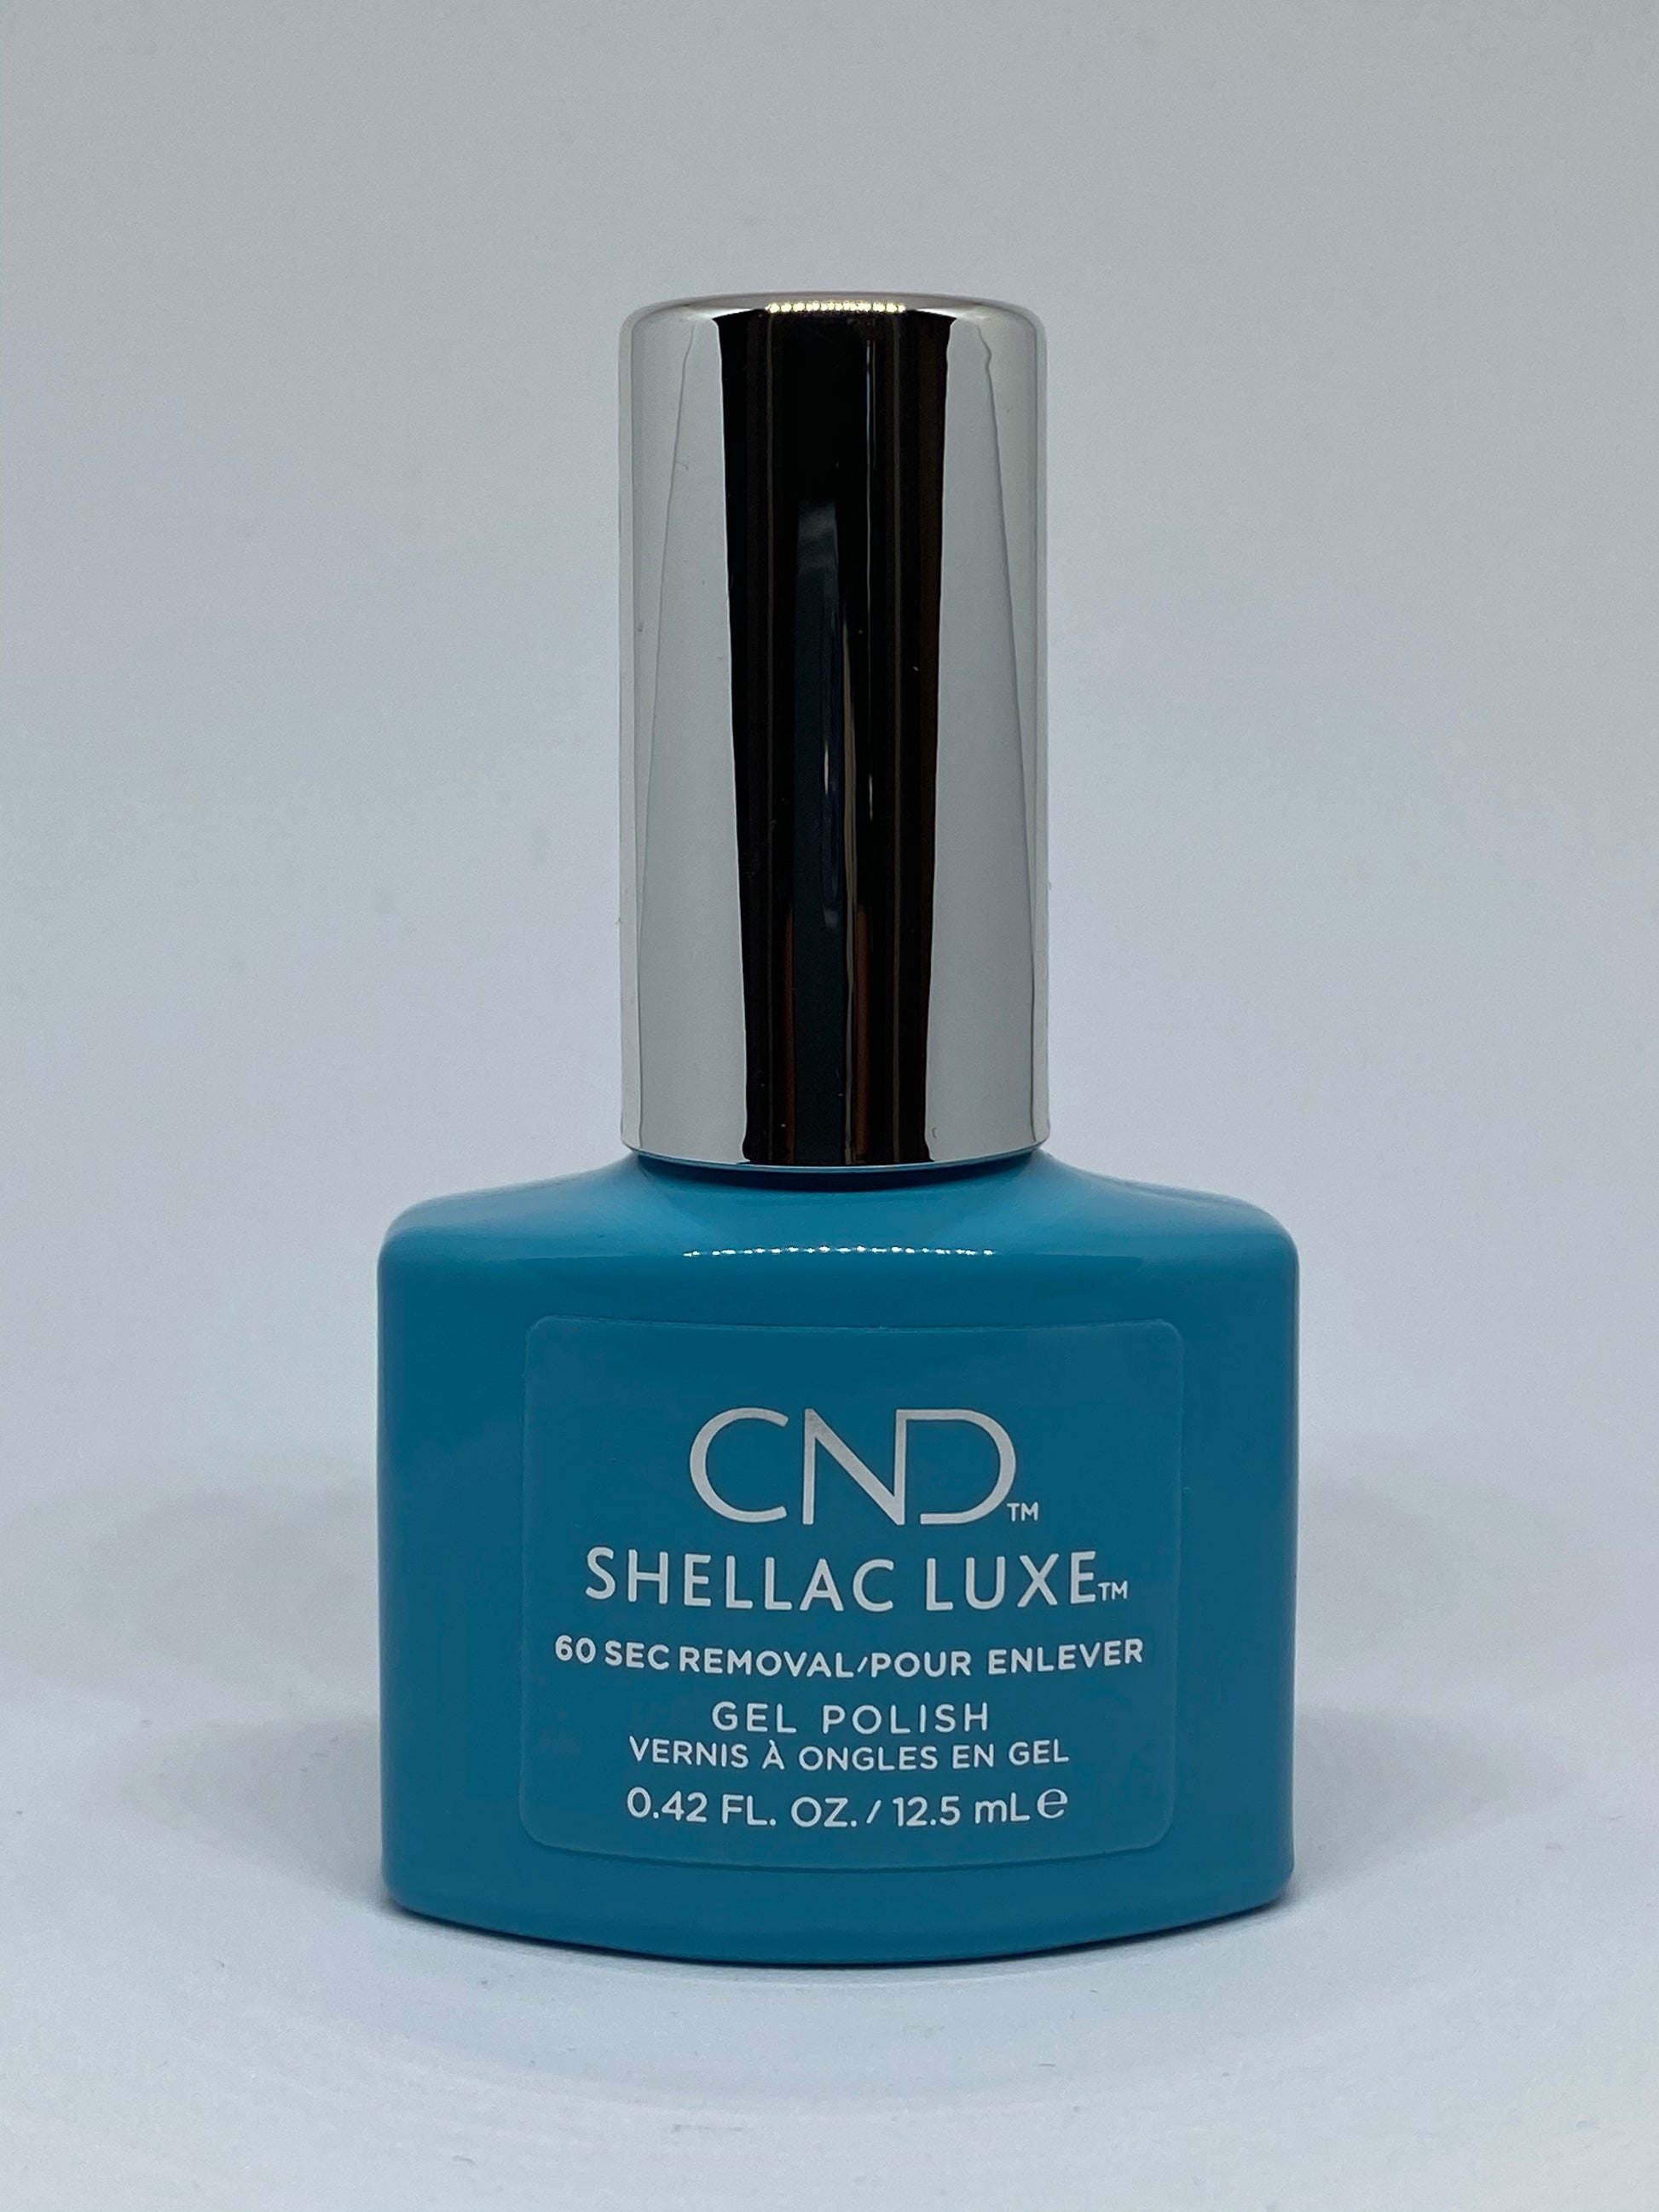 CND Shellac Luxe Gel Polish Aqua Intance #220-BeautyNmakeup.co.uk